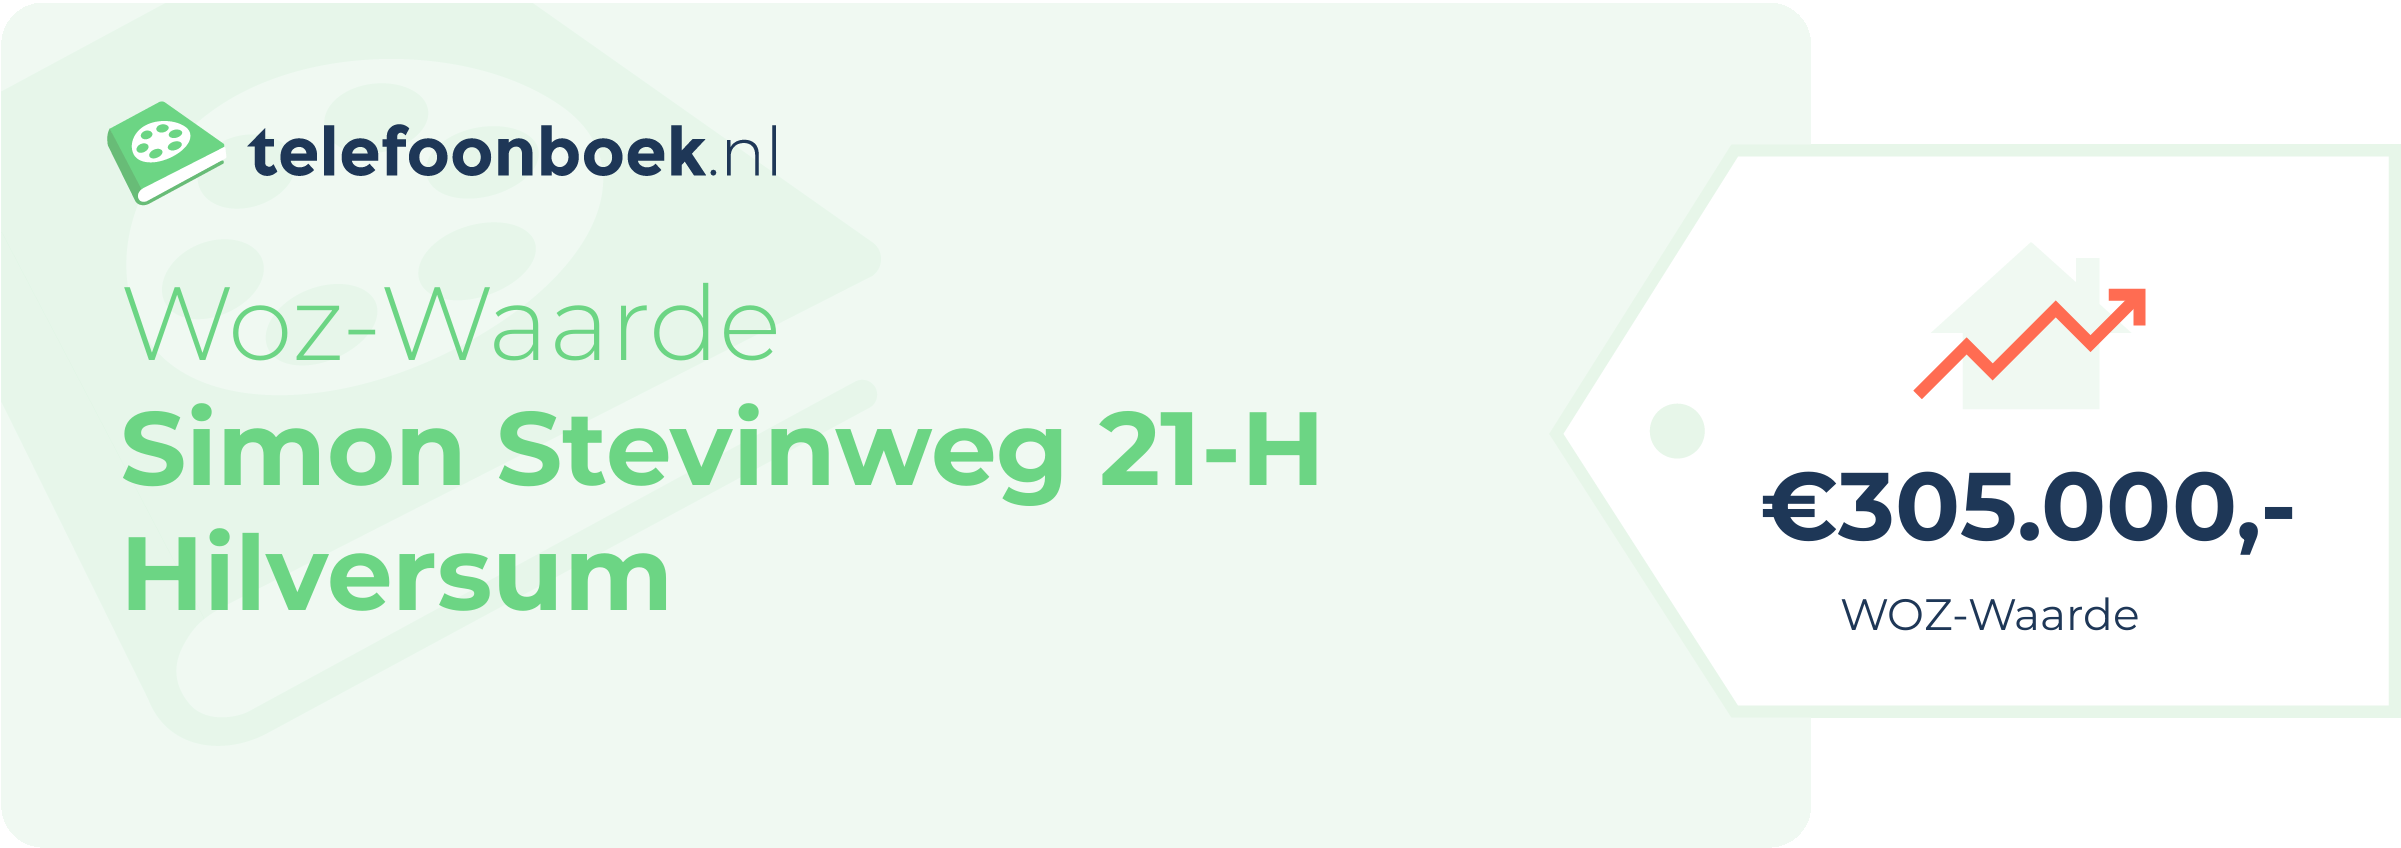 WOZ-waarde Simon Stevinweg 21-H Hilversum